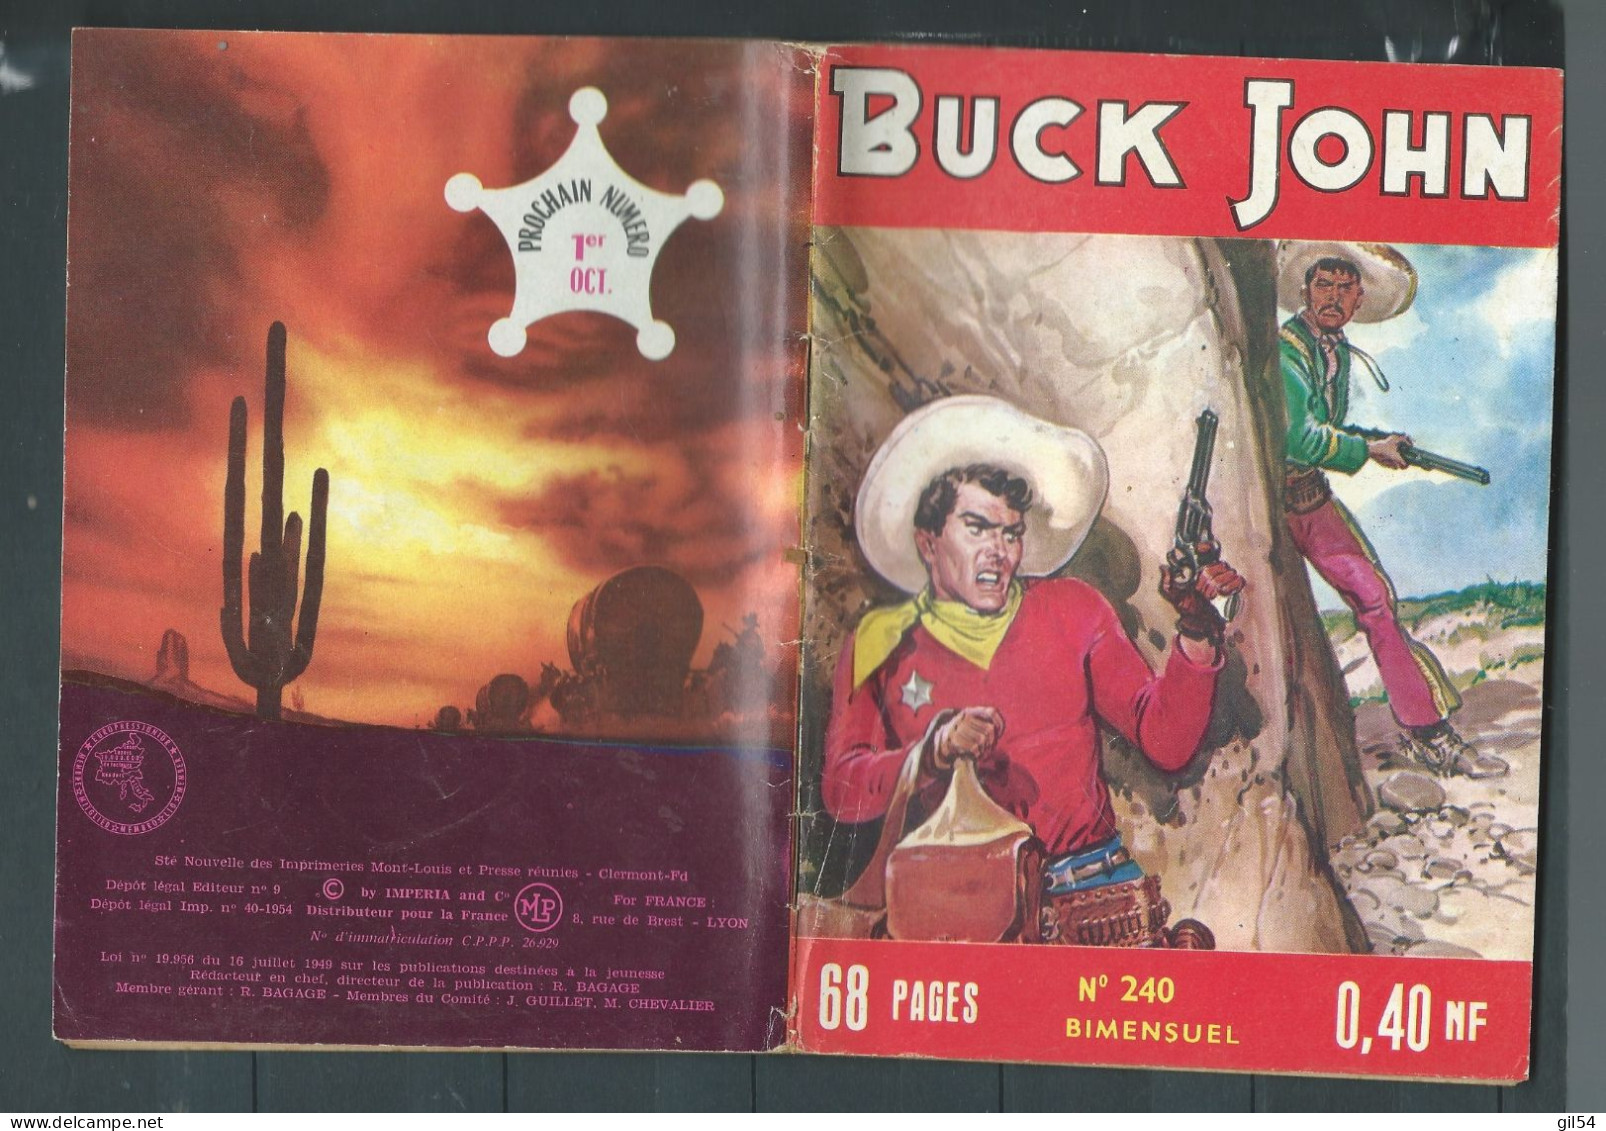 Bd " Buck John   " Bimensuel N° 240 " Enquete A Fuego "      , DL  N° 40  1954 - BE-   BUC 0104 - Formatos Pequeños